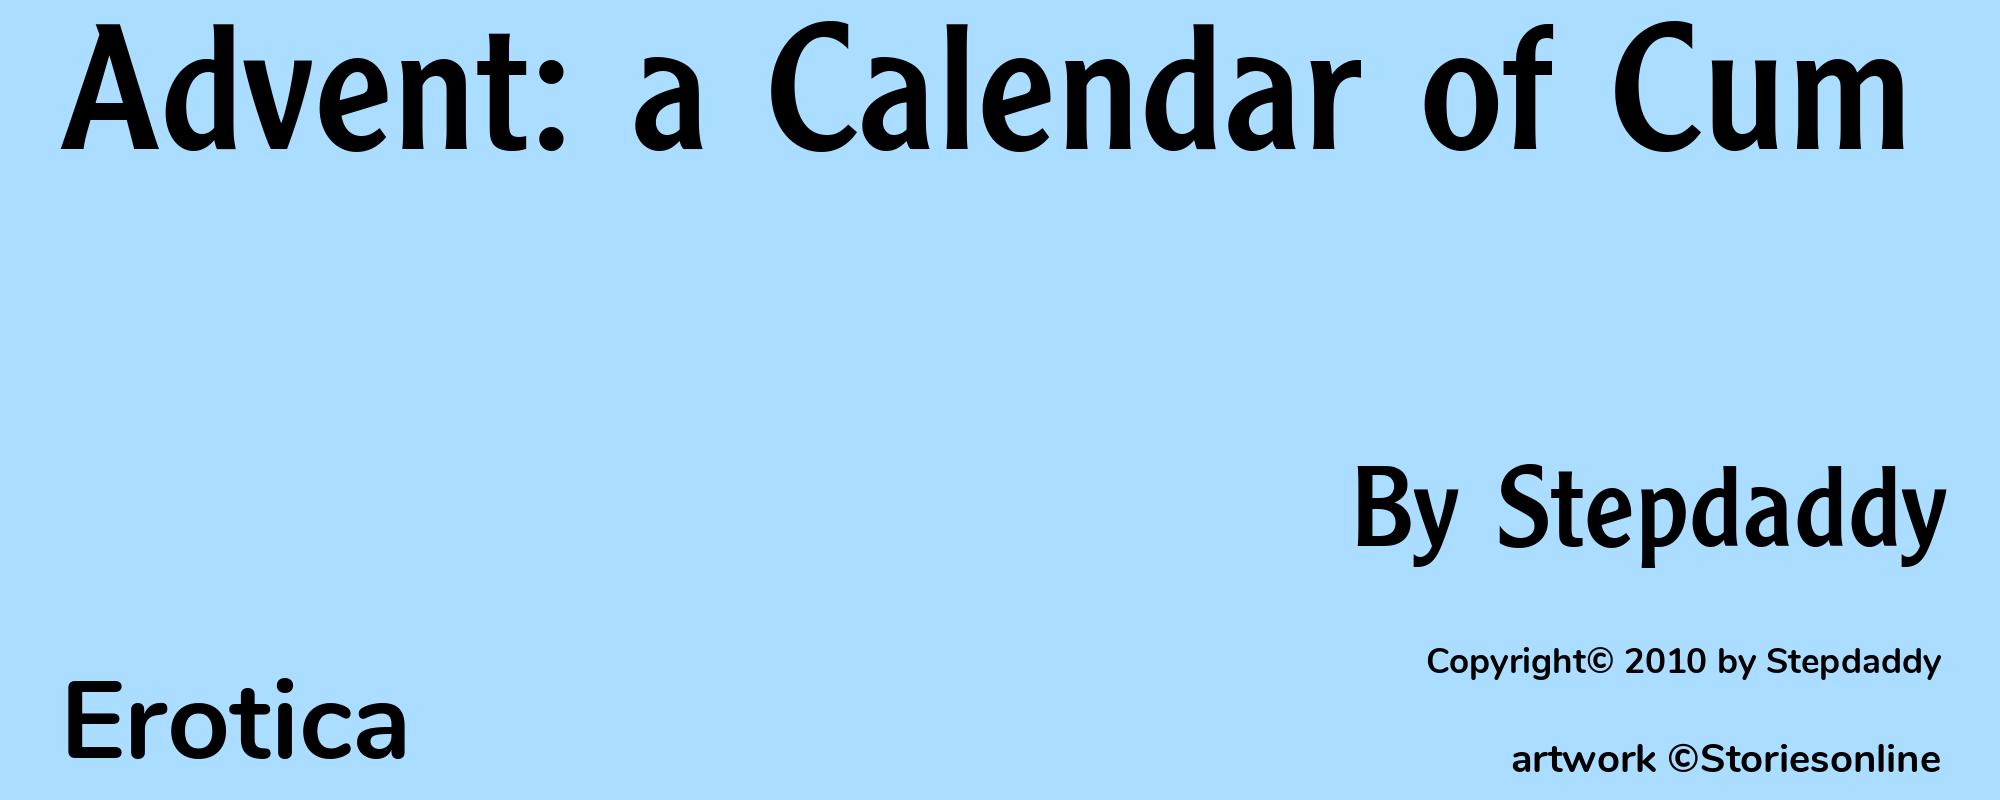 Advent: a Calendar of Cum - Cover